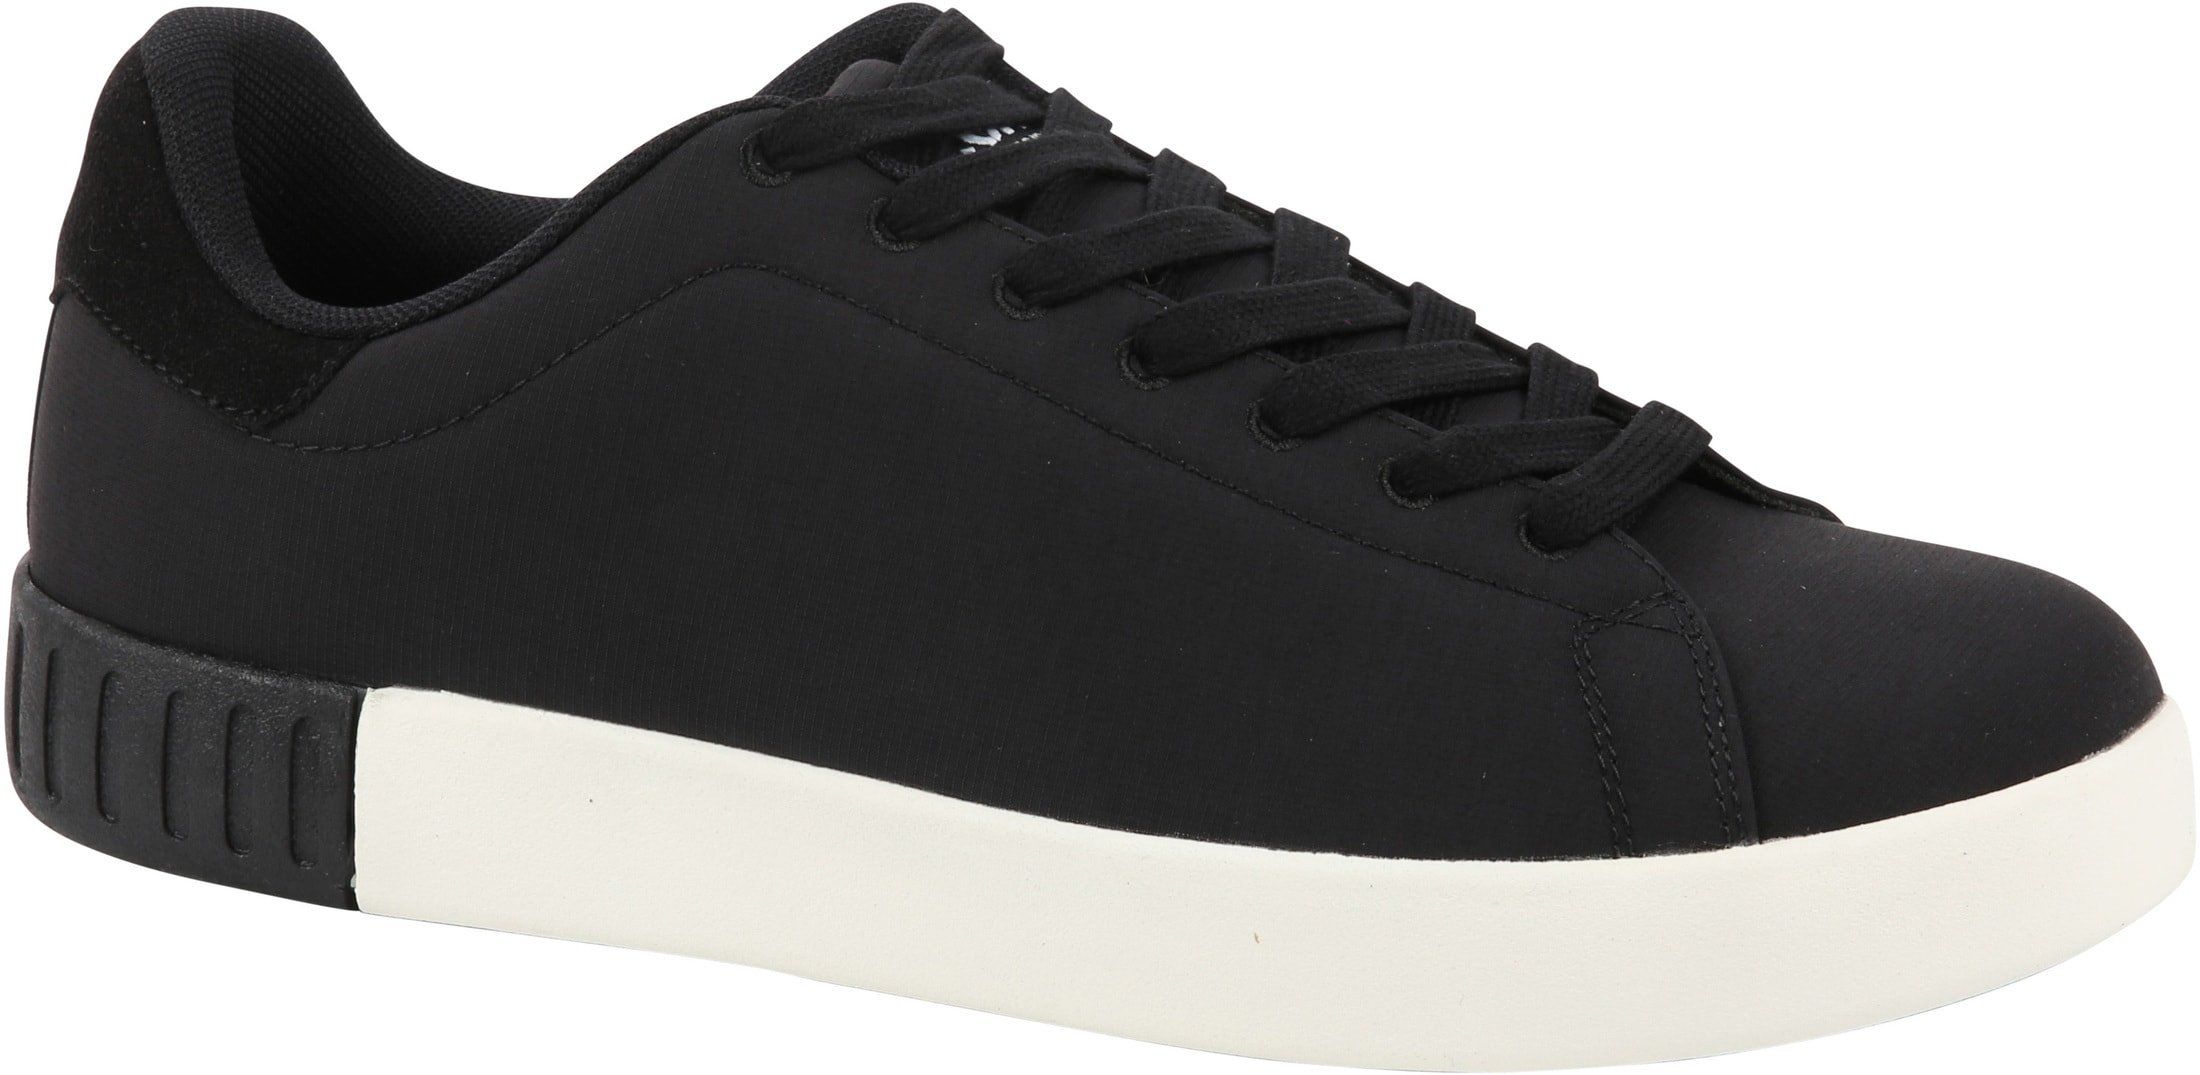 Ecoalf Sneaker Austin Black size 8.5